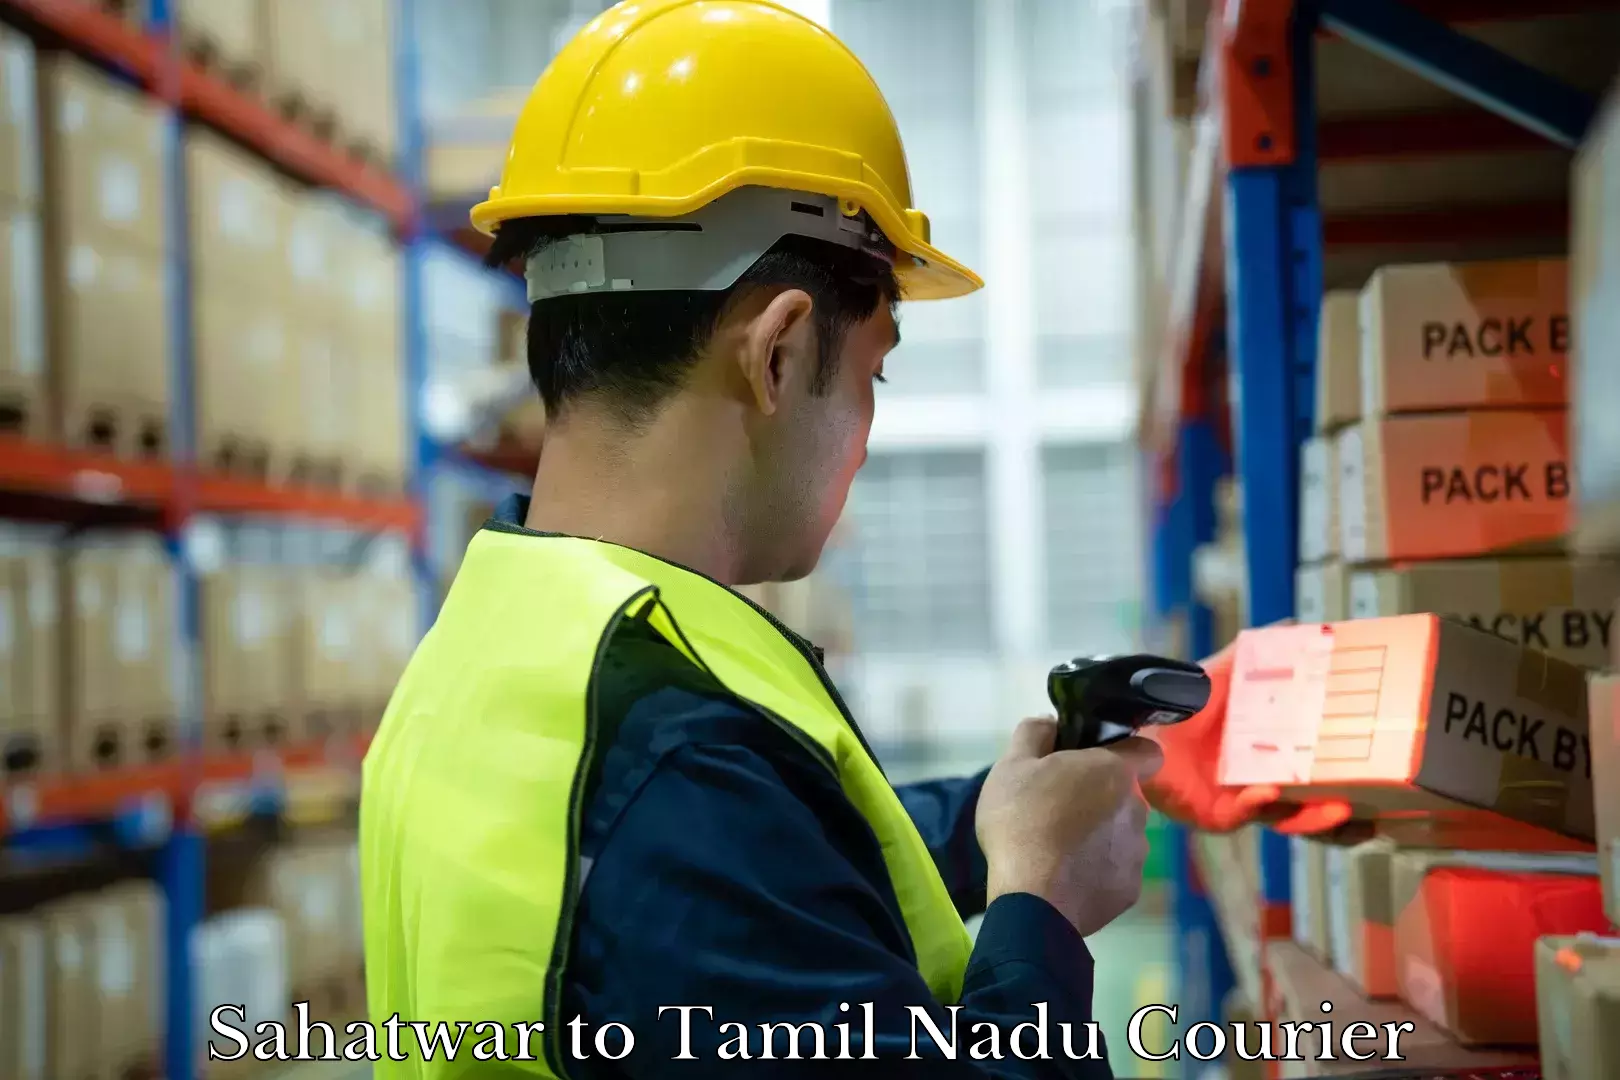 Luggage shipment tracking Sahatwar to Tamil Nadu